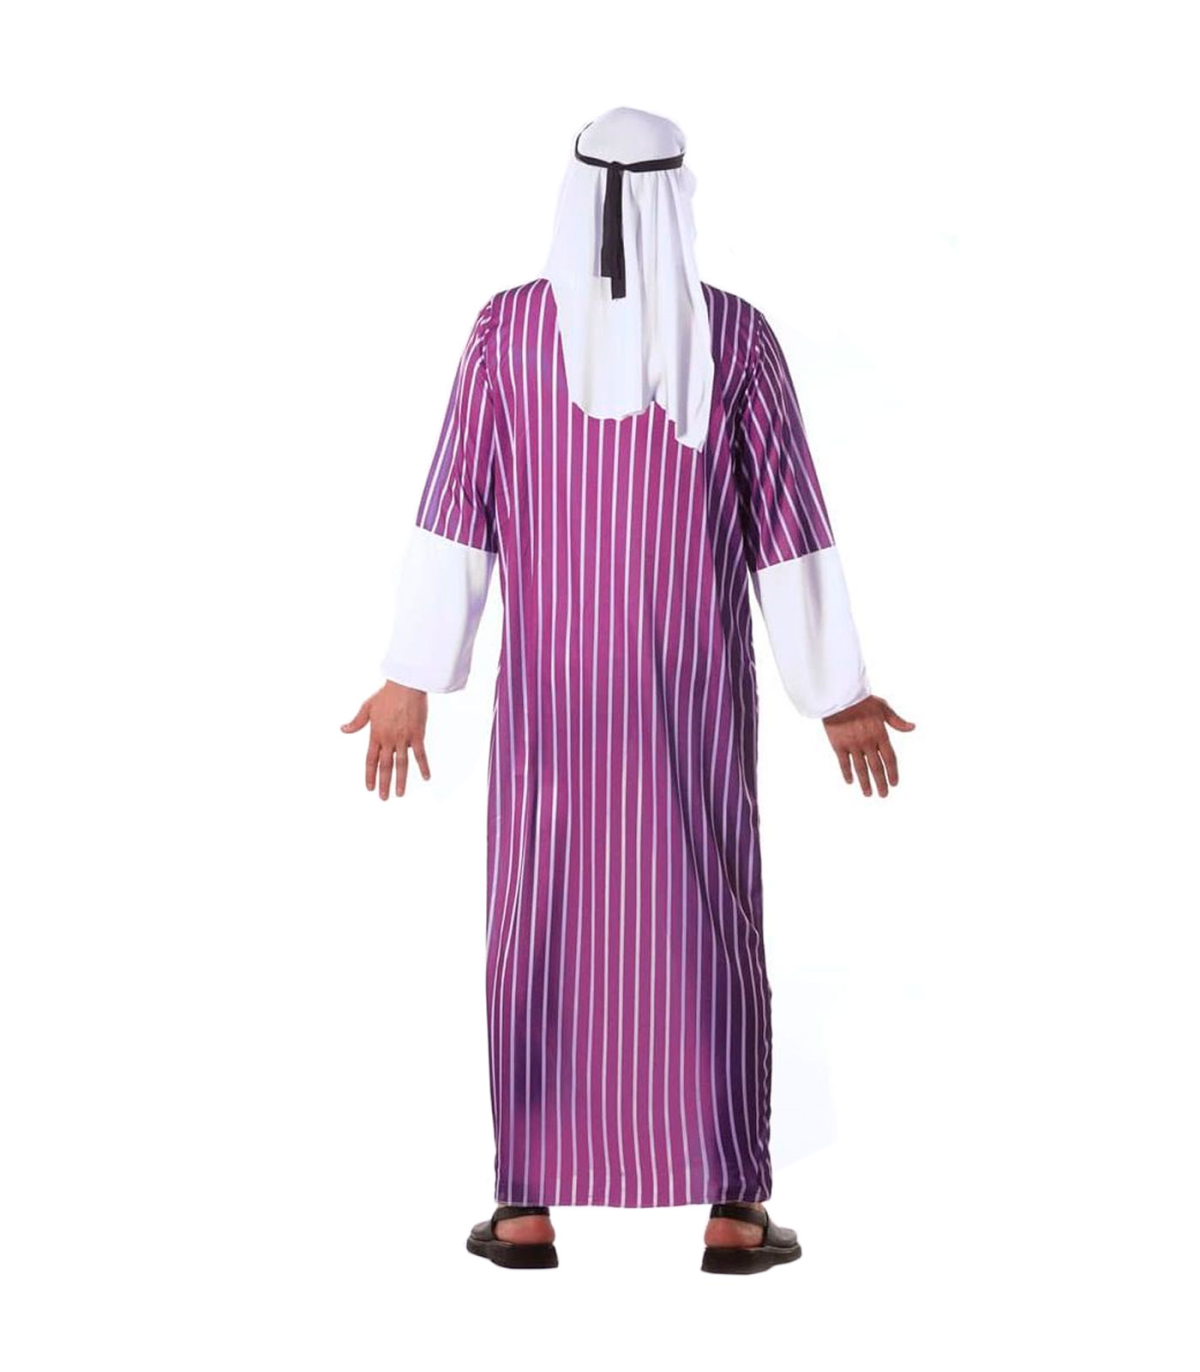 Tradineur - Disfraz de jeque árabe para adulto, 100% poliéster